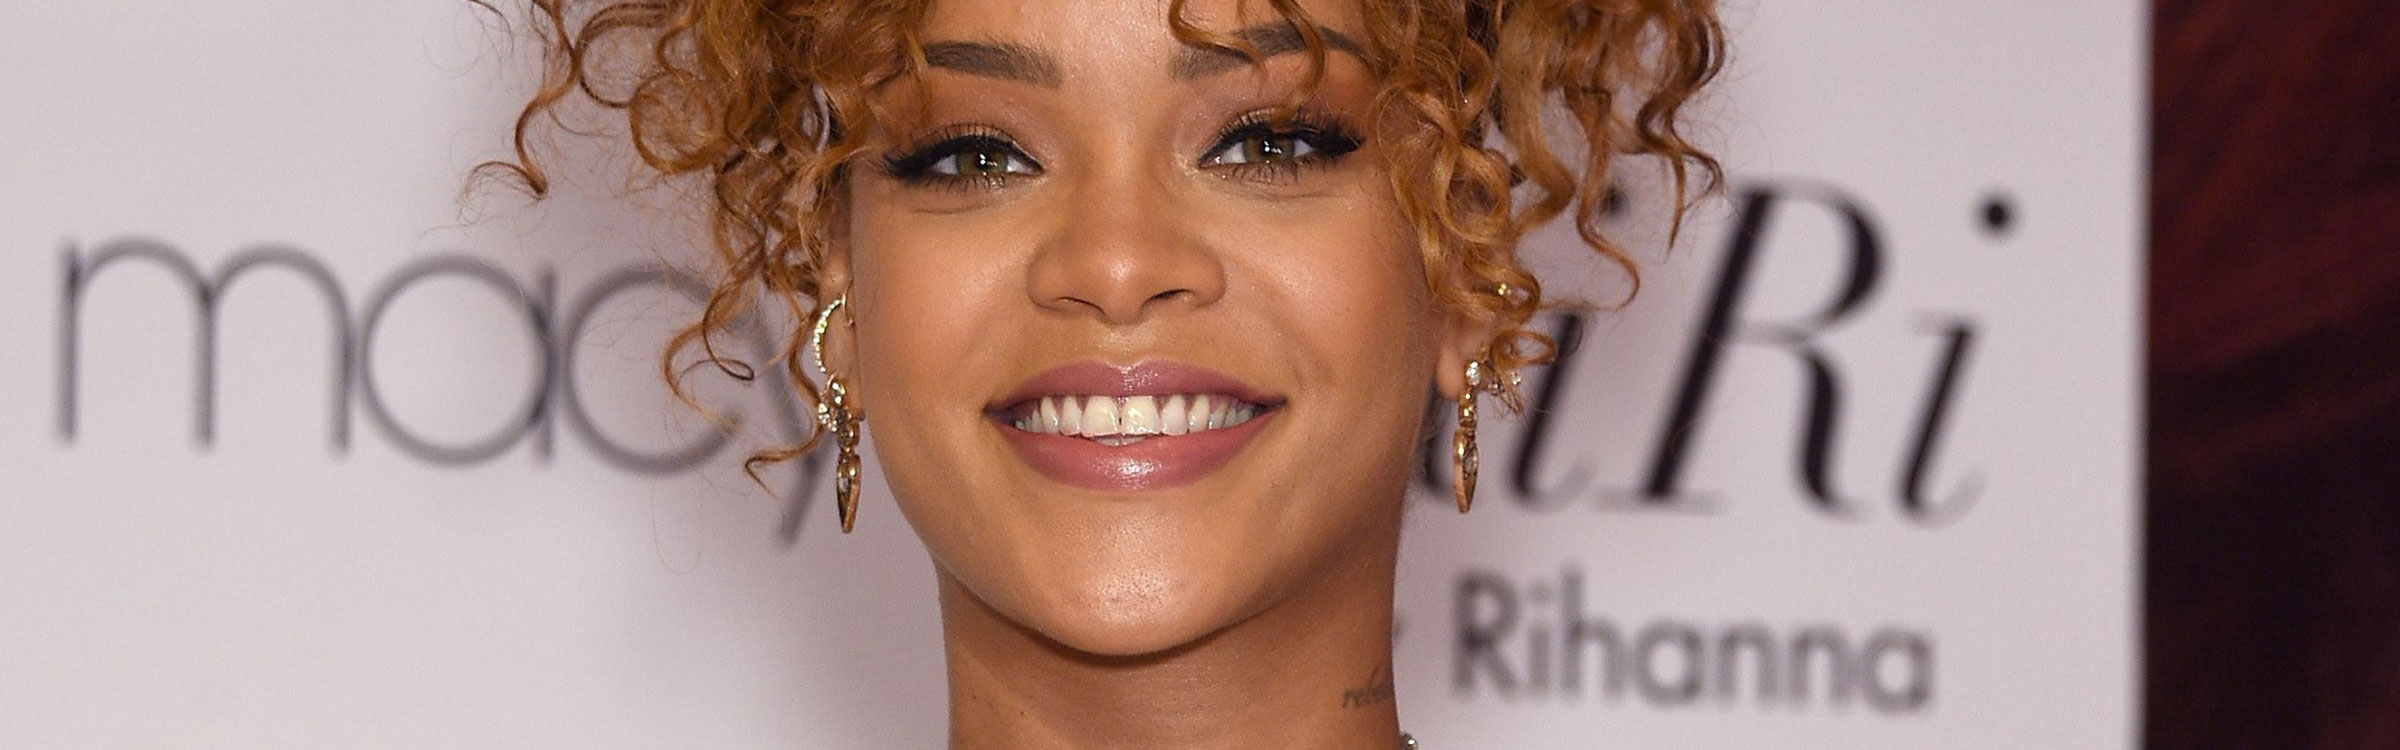 Rihannaheader